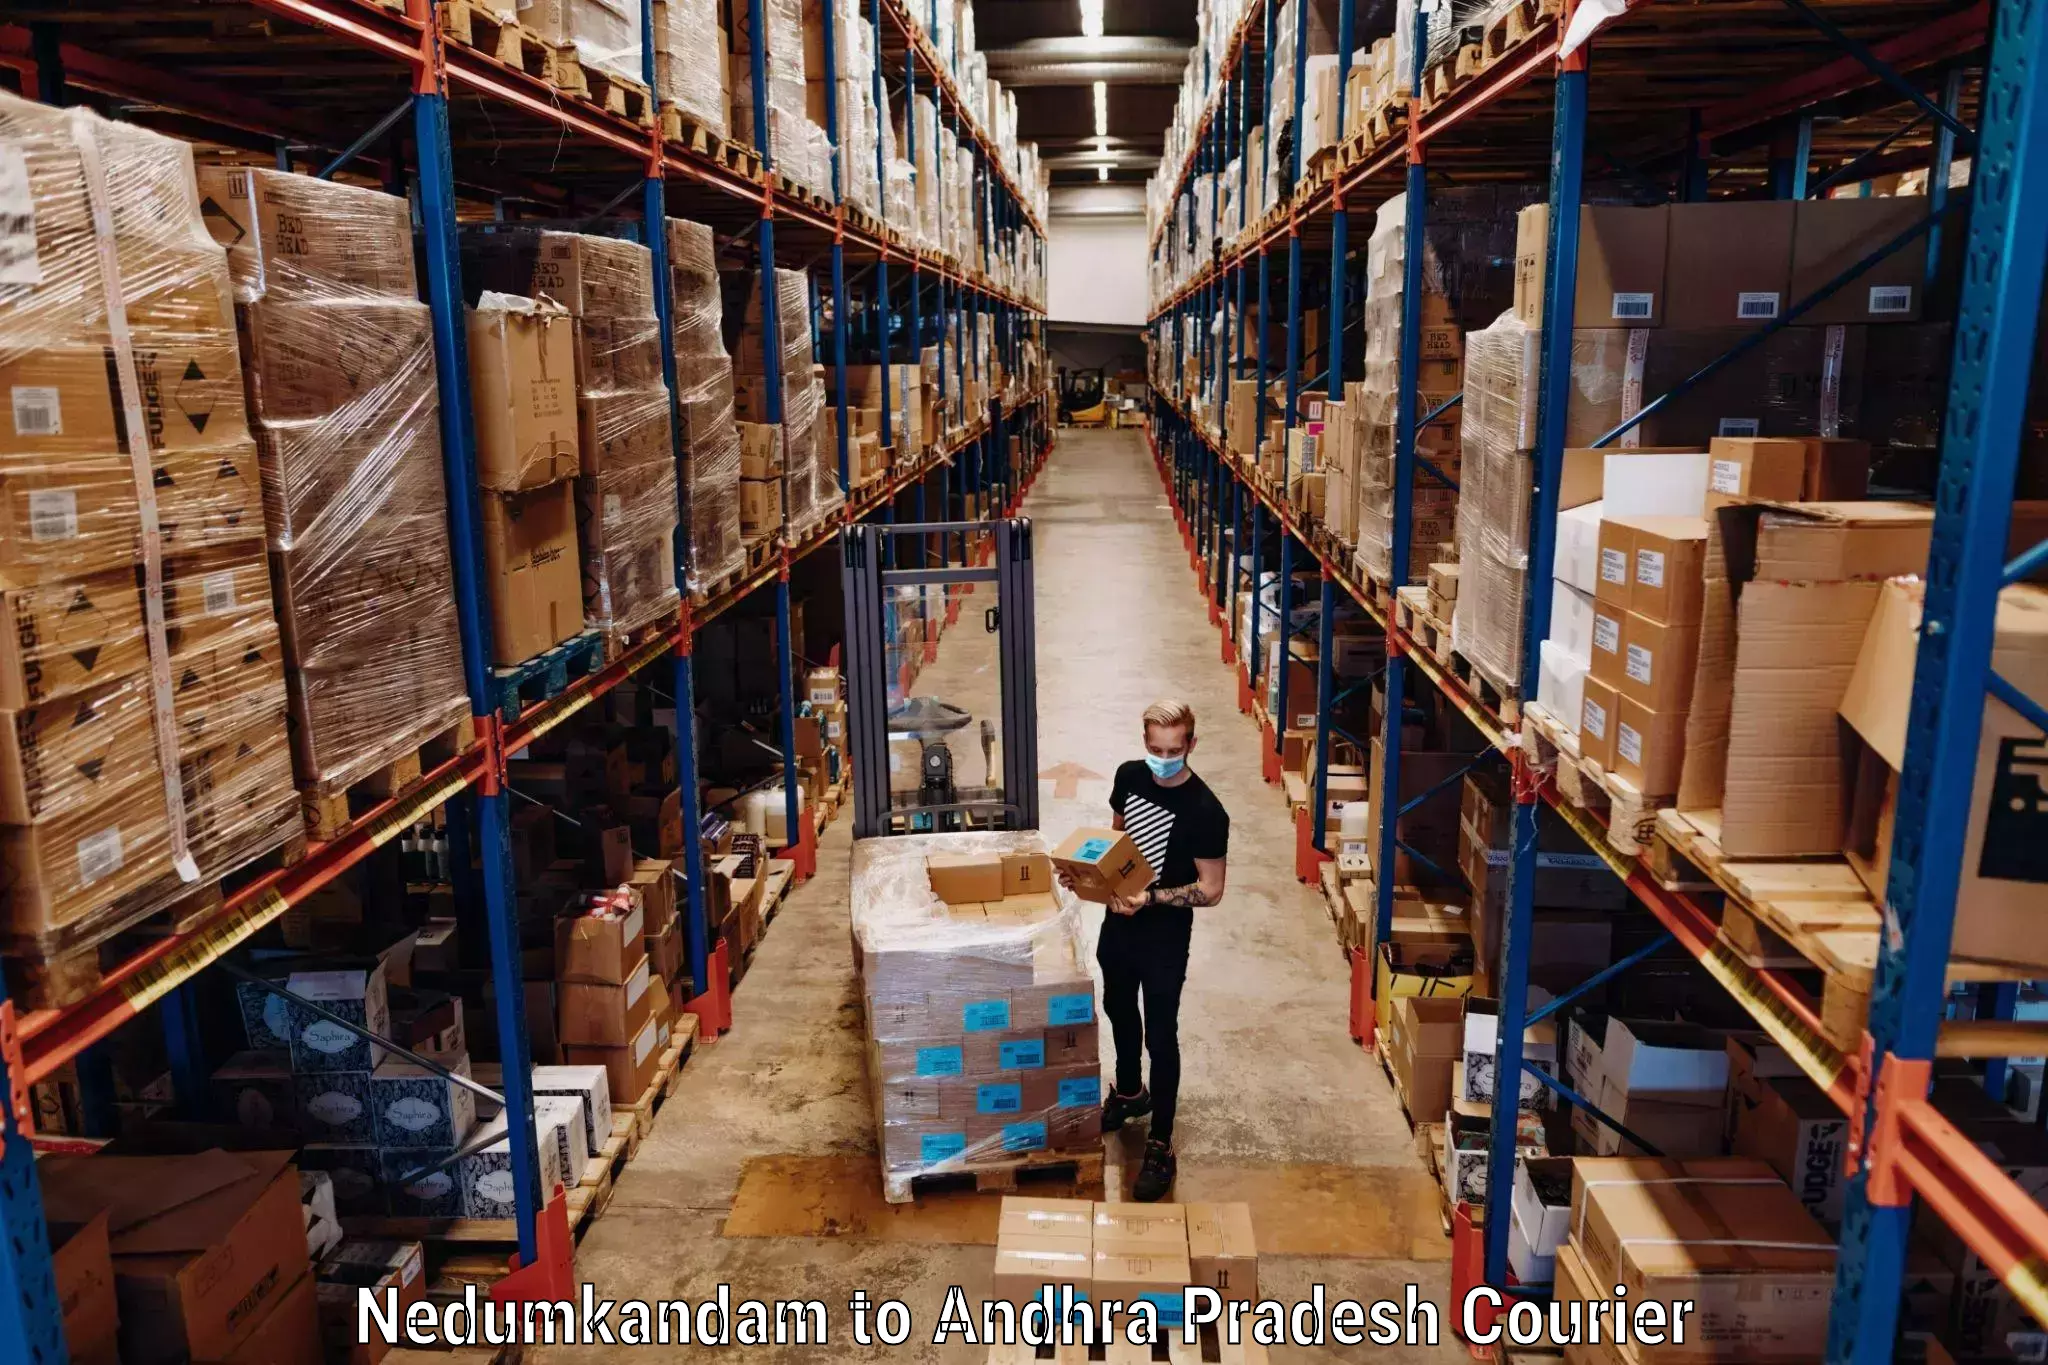 Luggage delivery providers Nedumkandam to Visakhapatnam Port